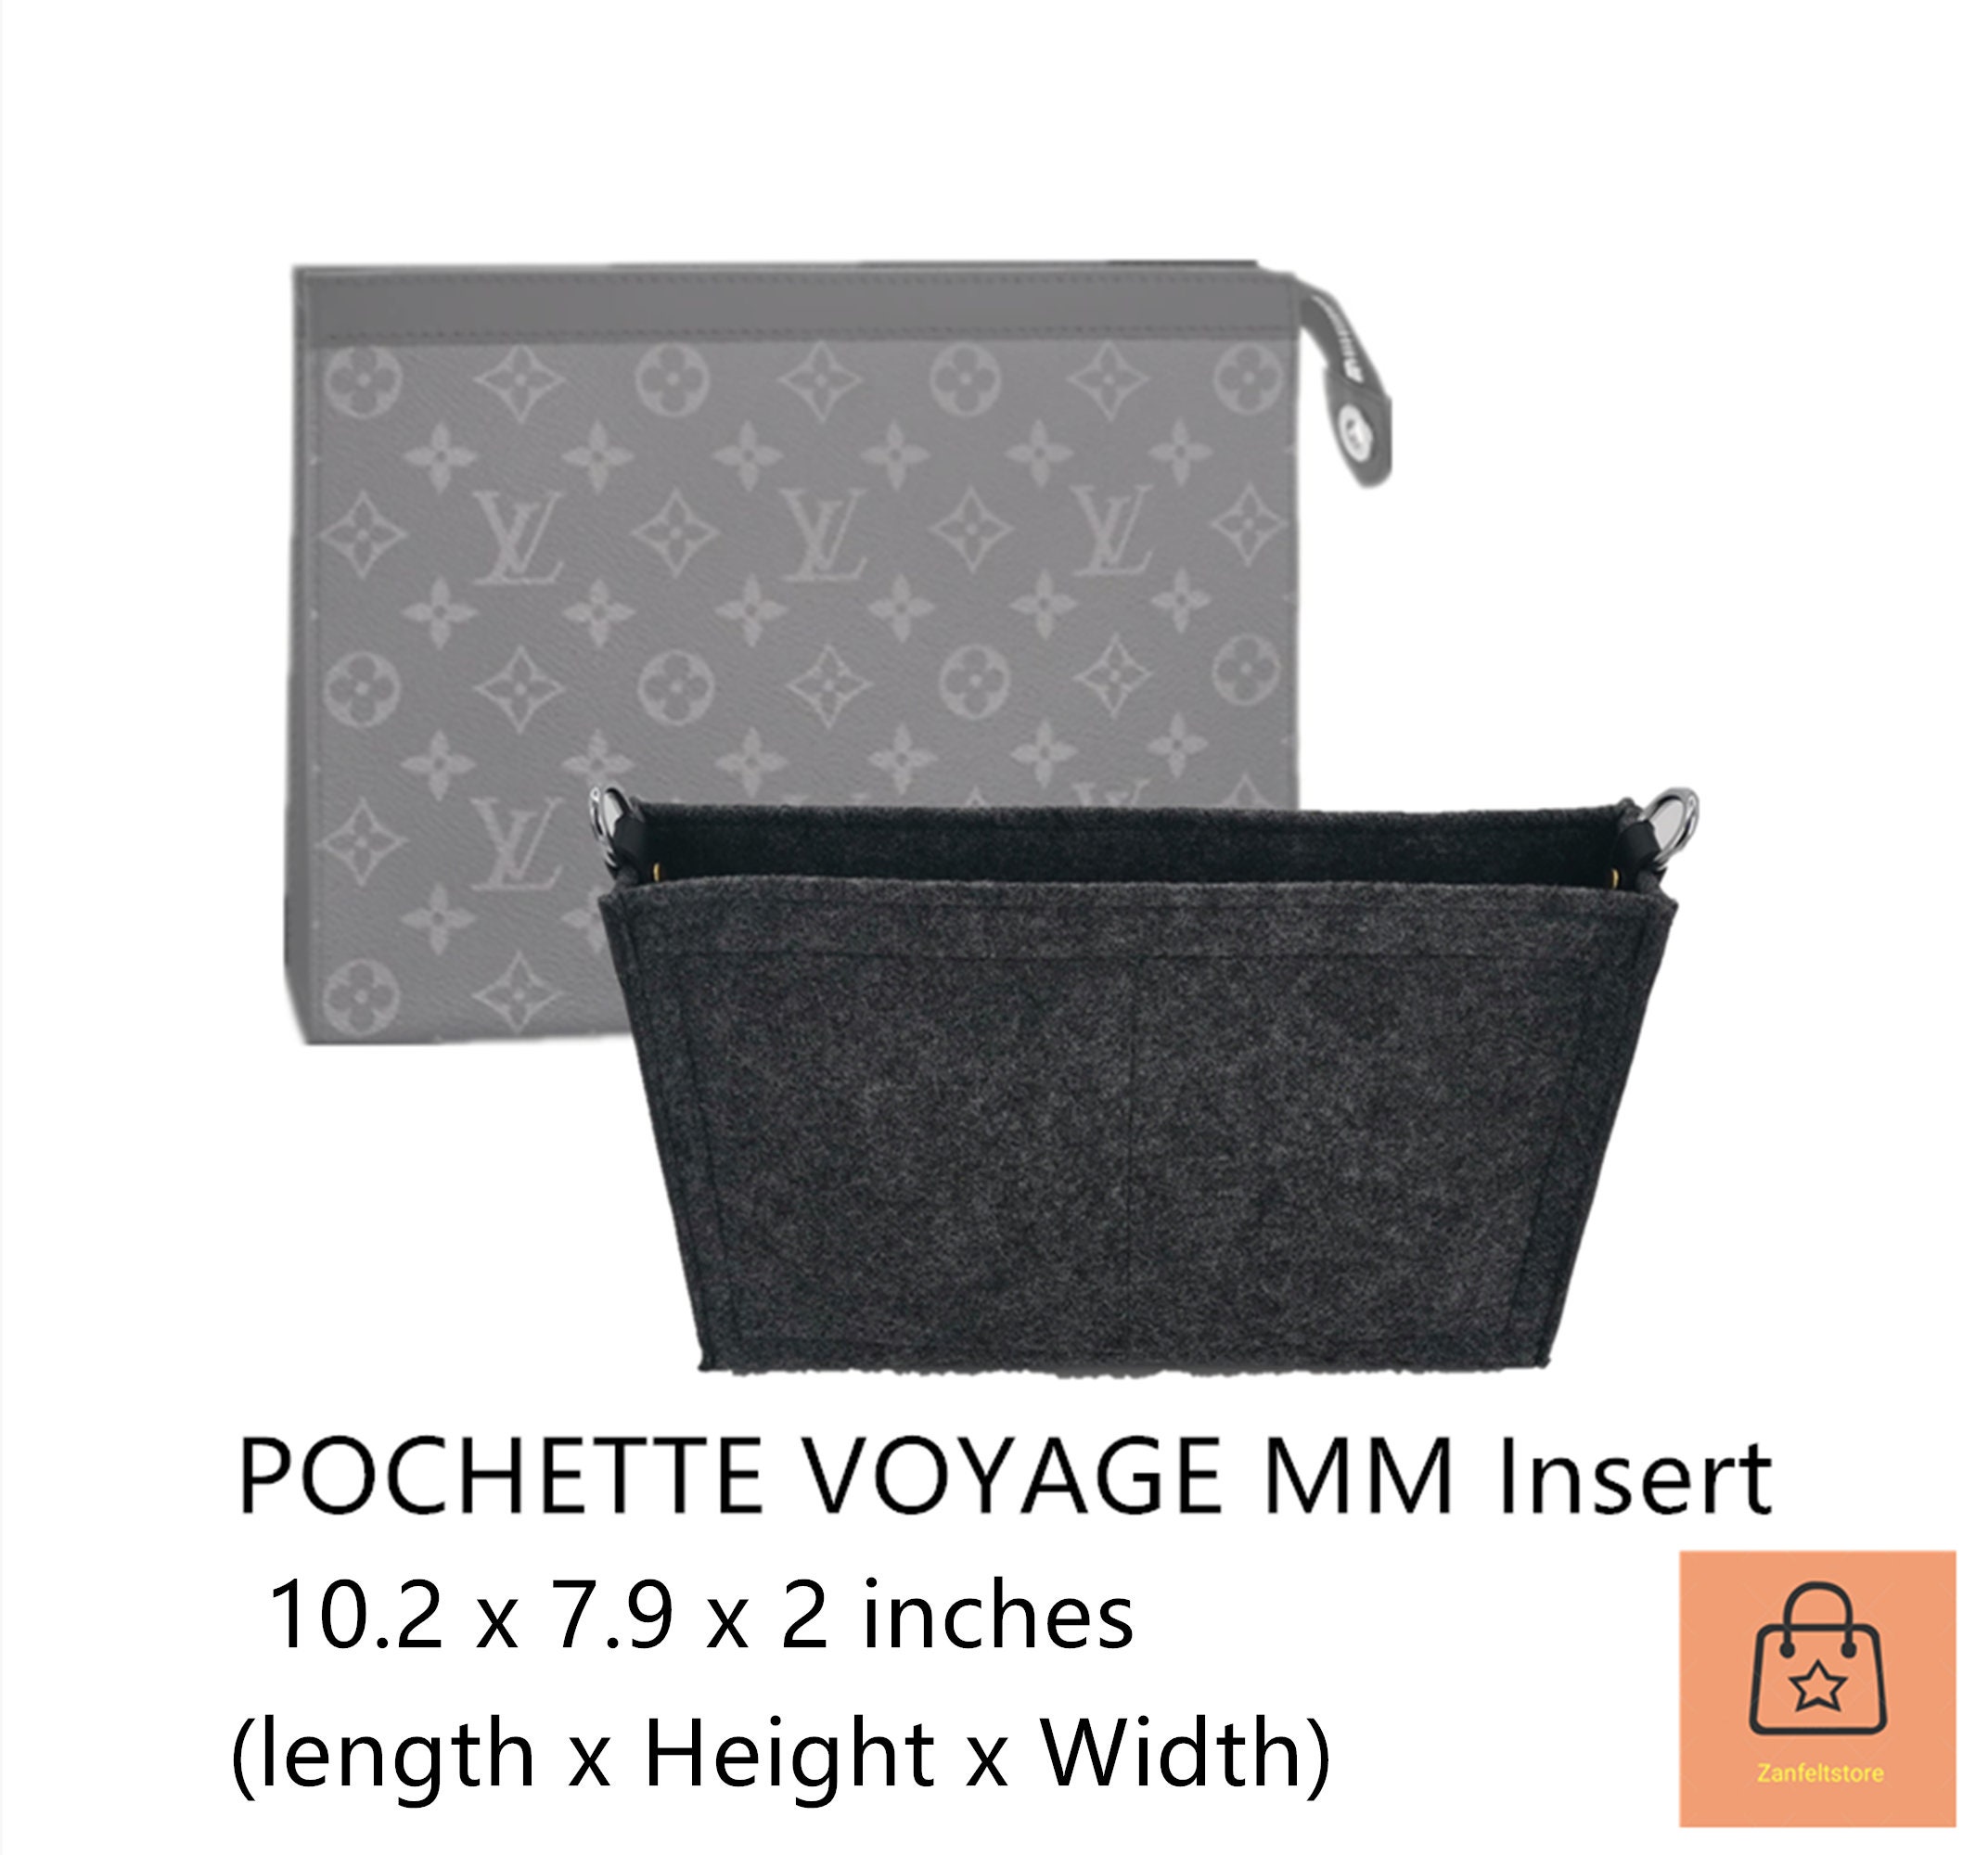 Lckaey Purse Organizer for lv pochette métis in All Departments inserts  Pochette M é tis voyager insert 2084Black grey